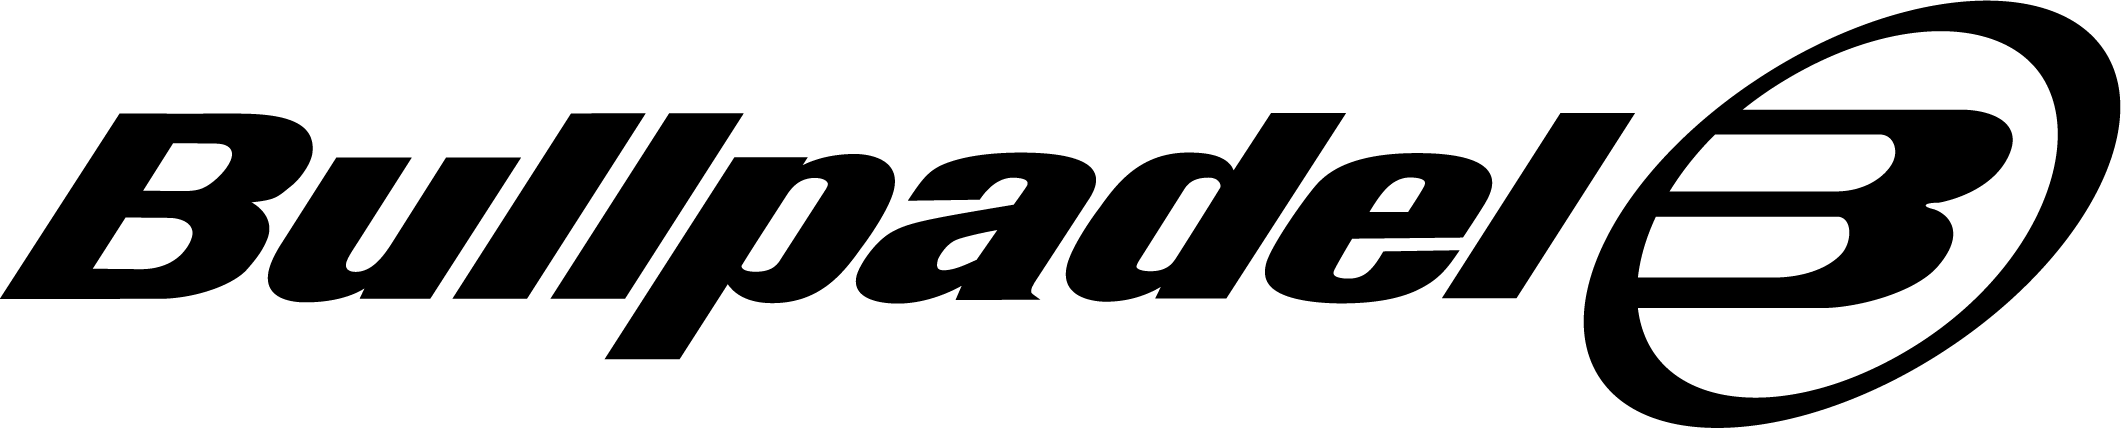 Bullpadel logo